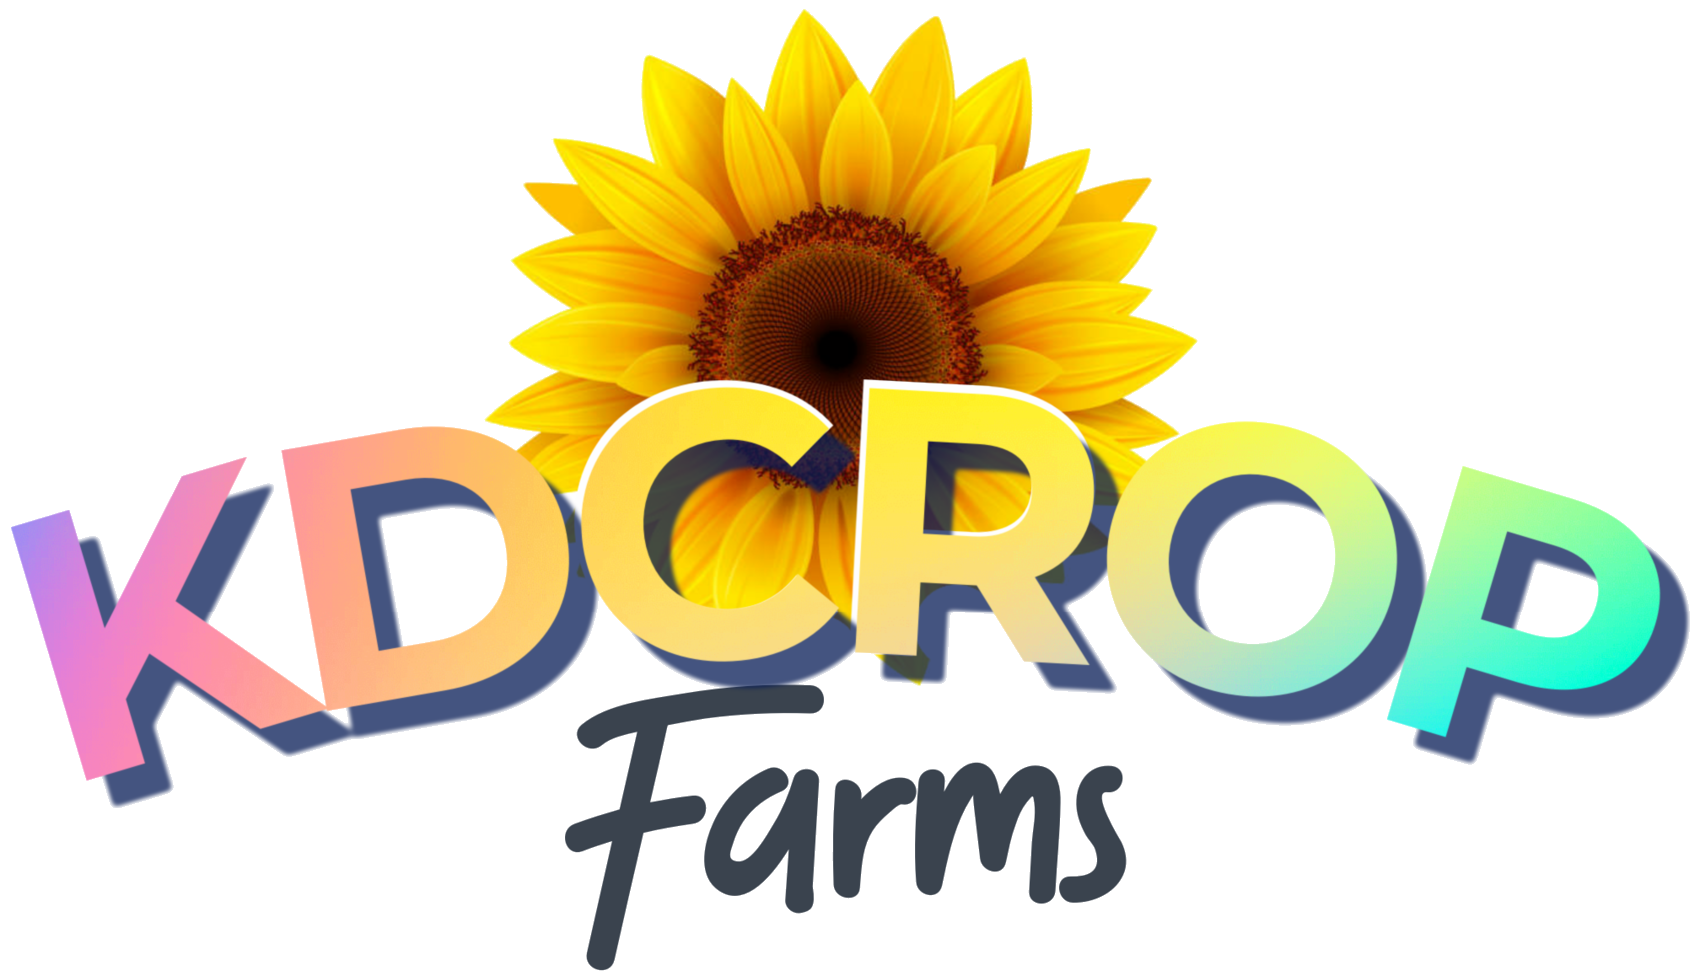 kdcrop farm logo